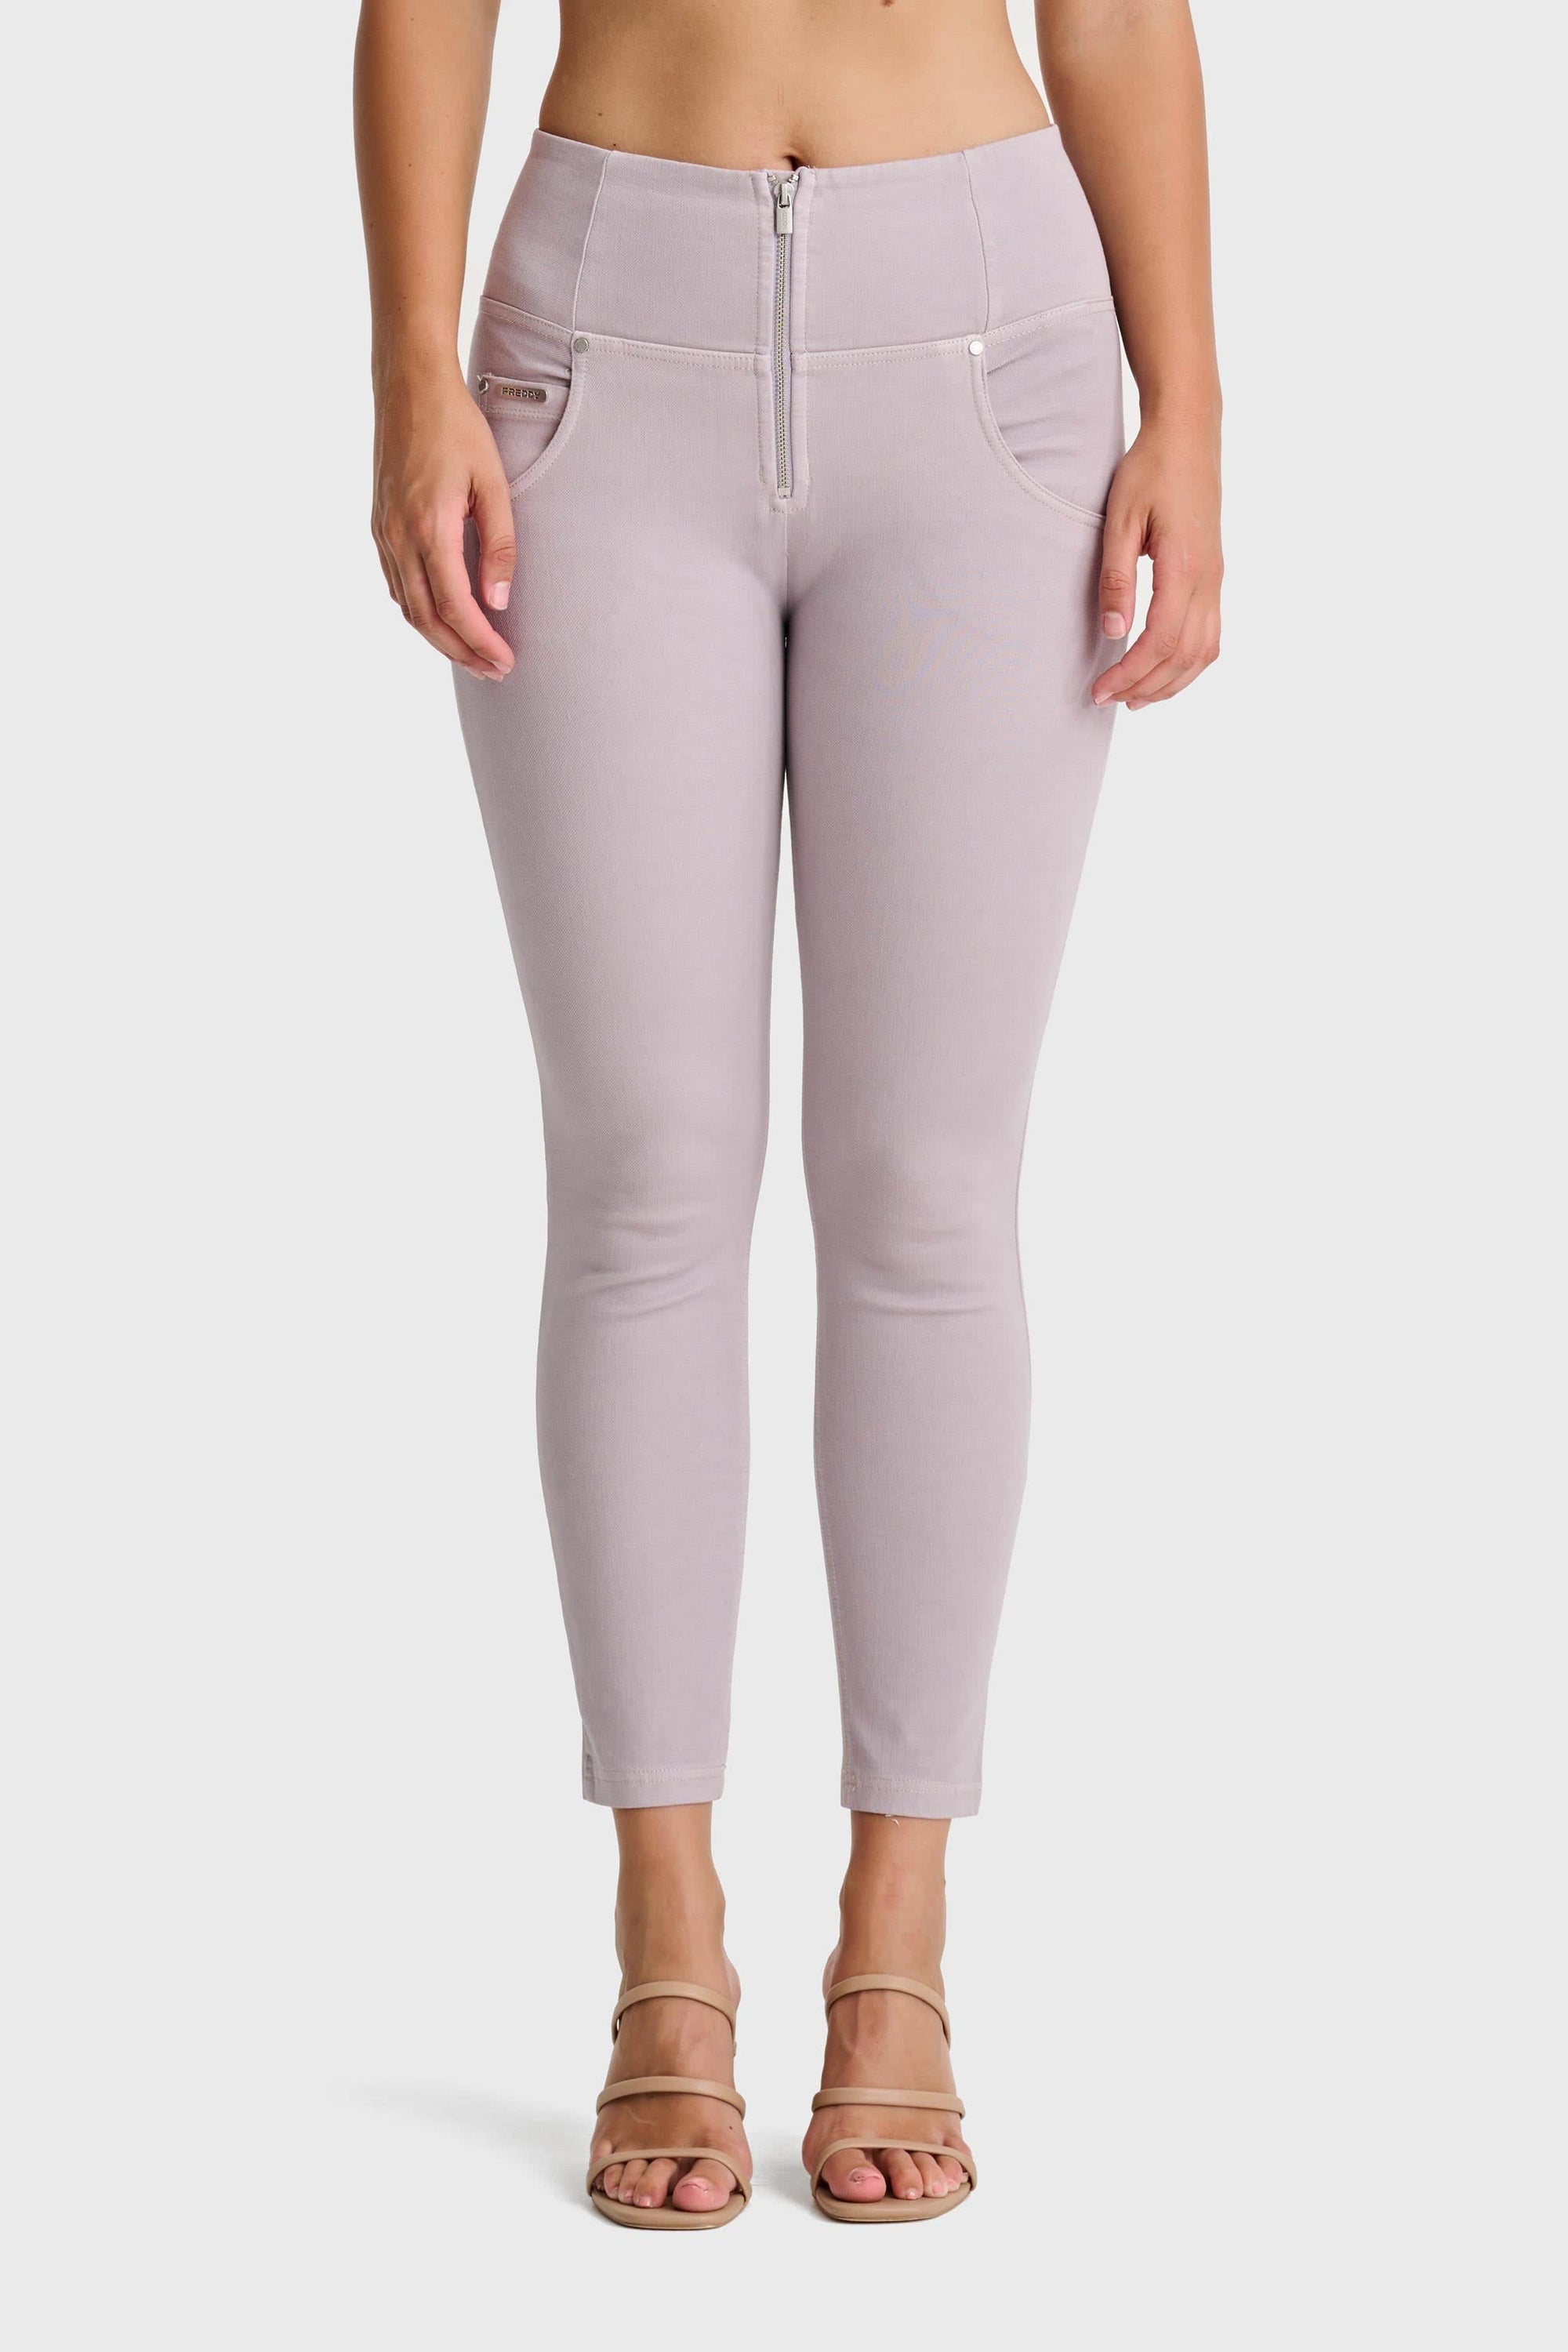 WR.UP® Snug Jeans - High Waisted - 7/8 Length - Light Grey 5